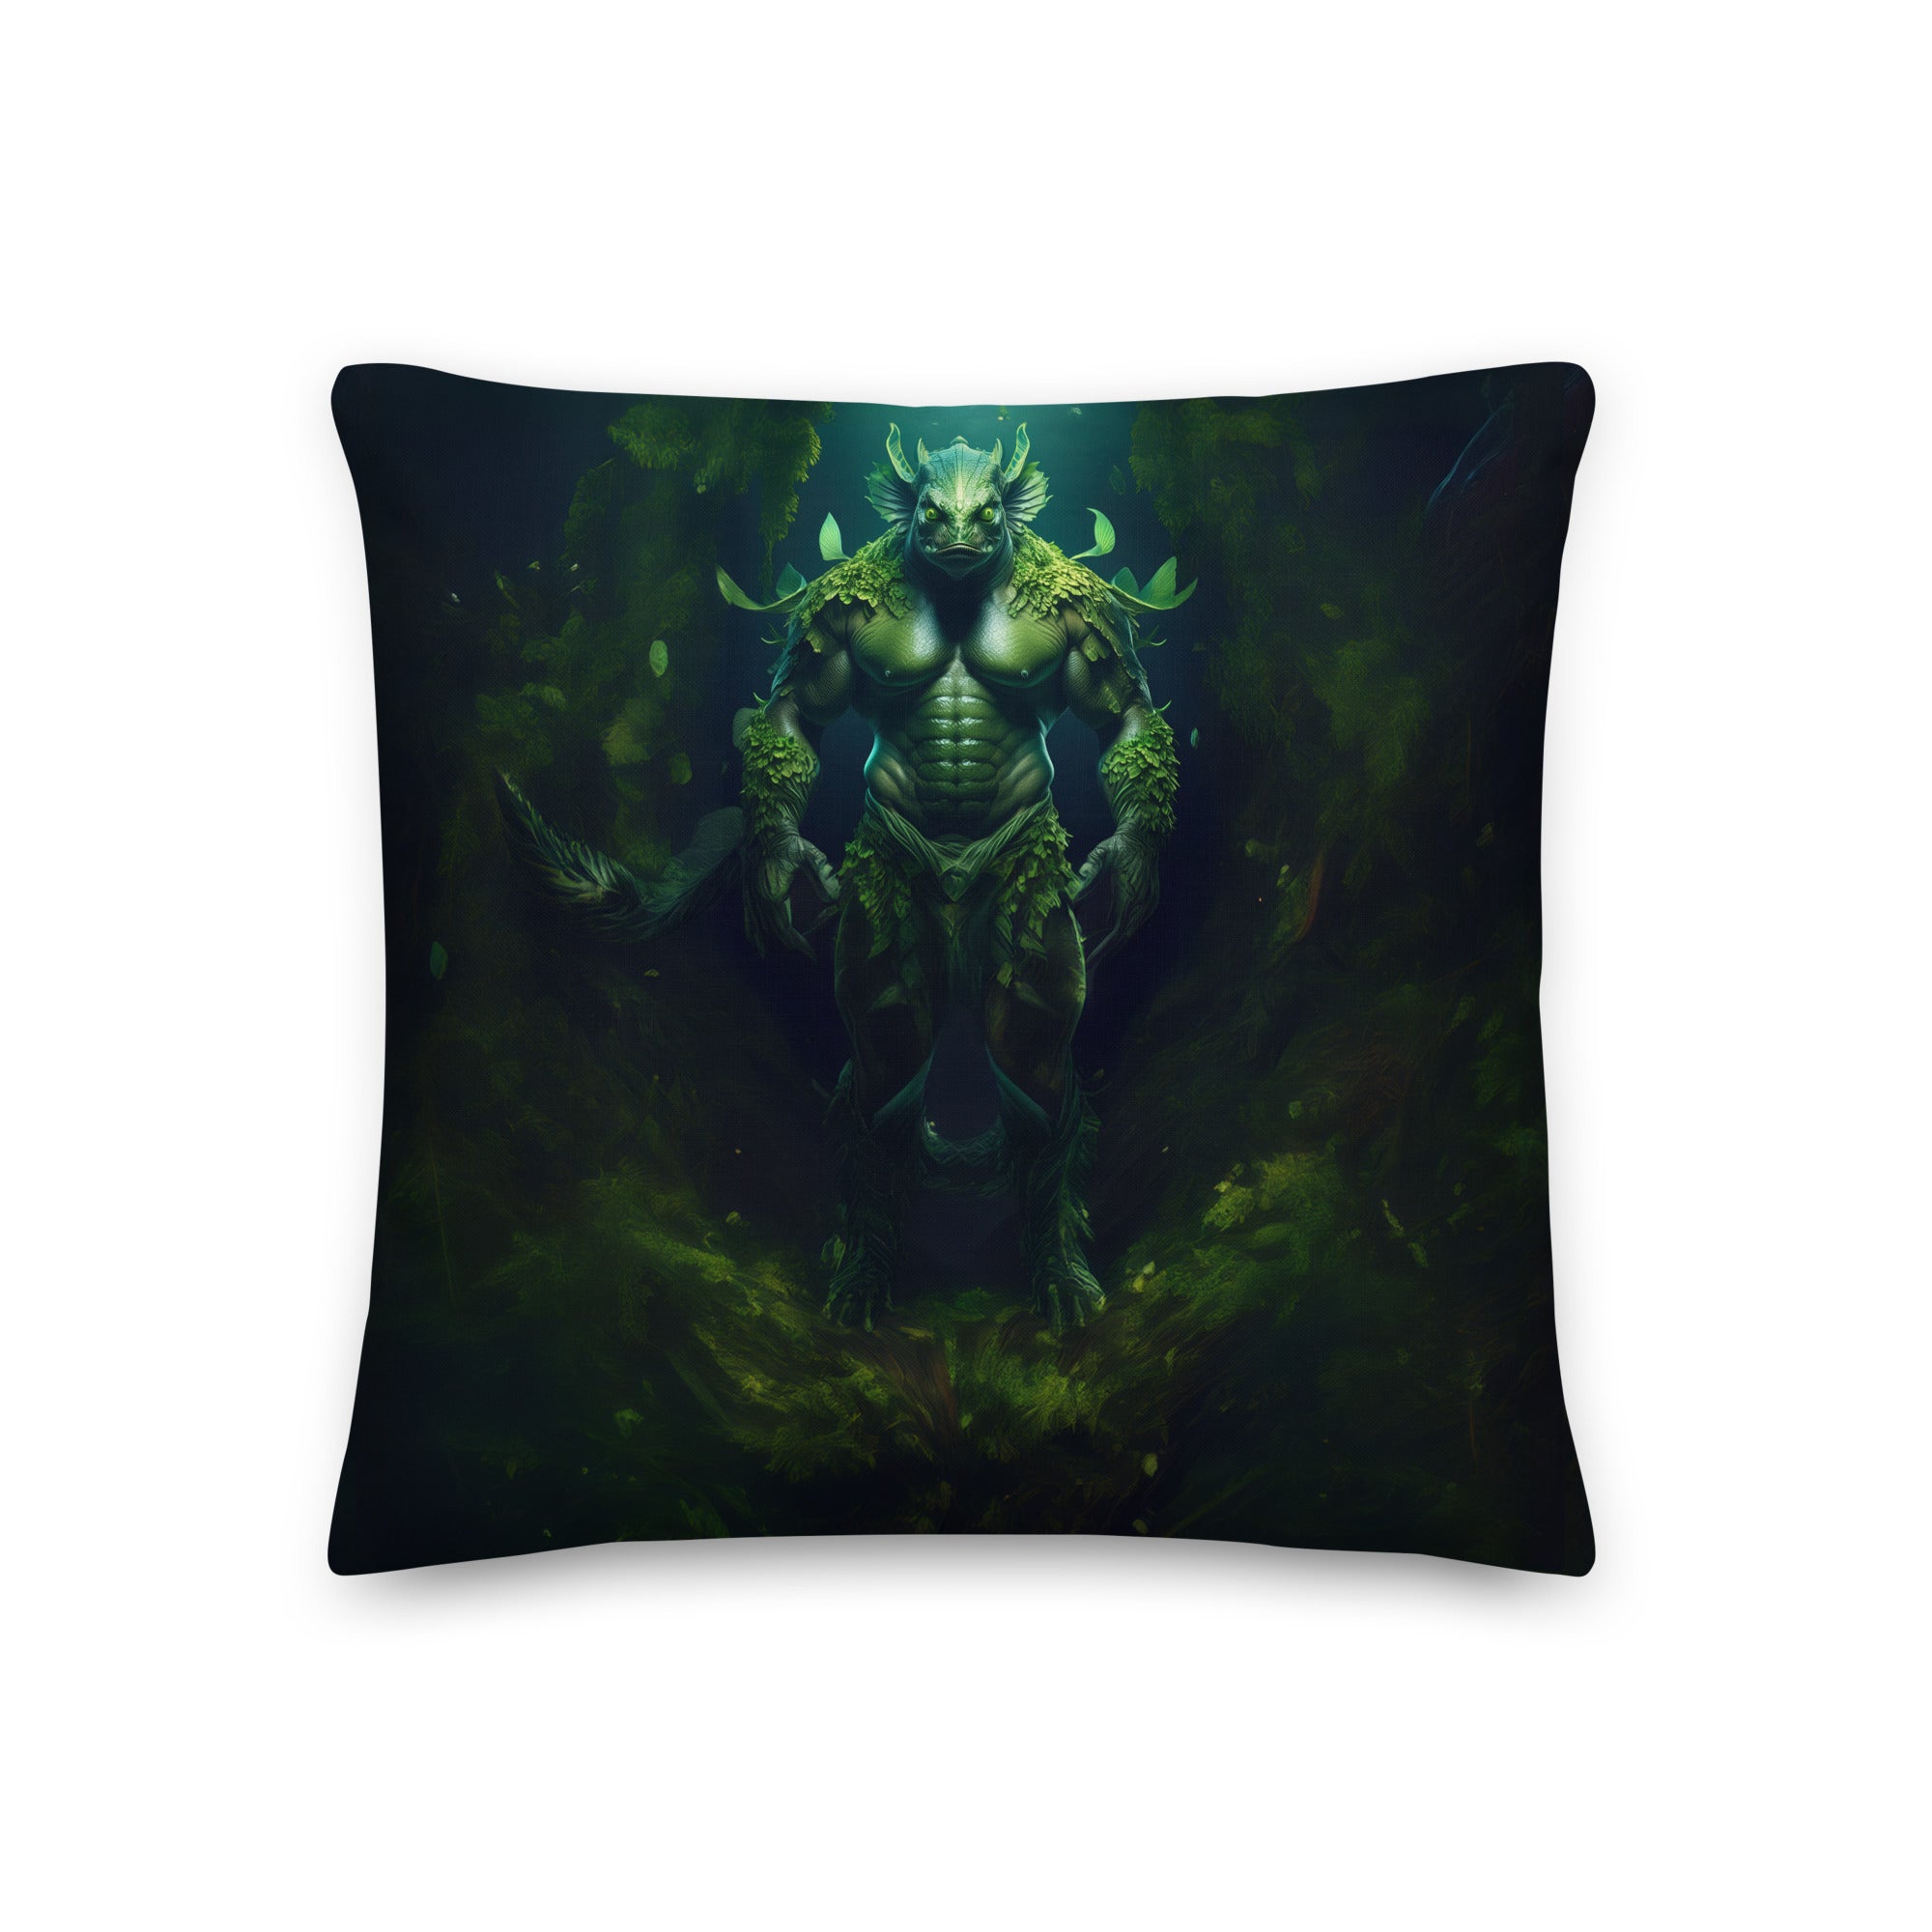 The Monster Squad "The Creature" Premium Pillow